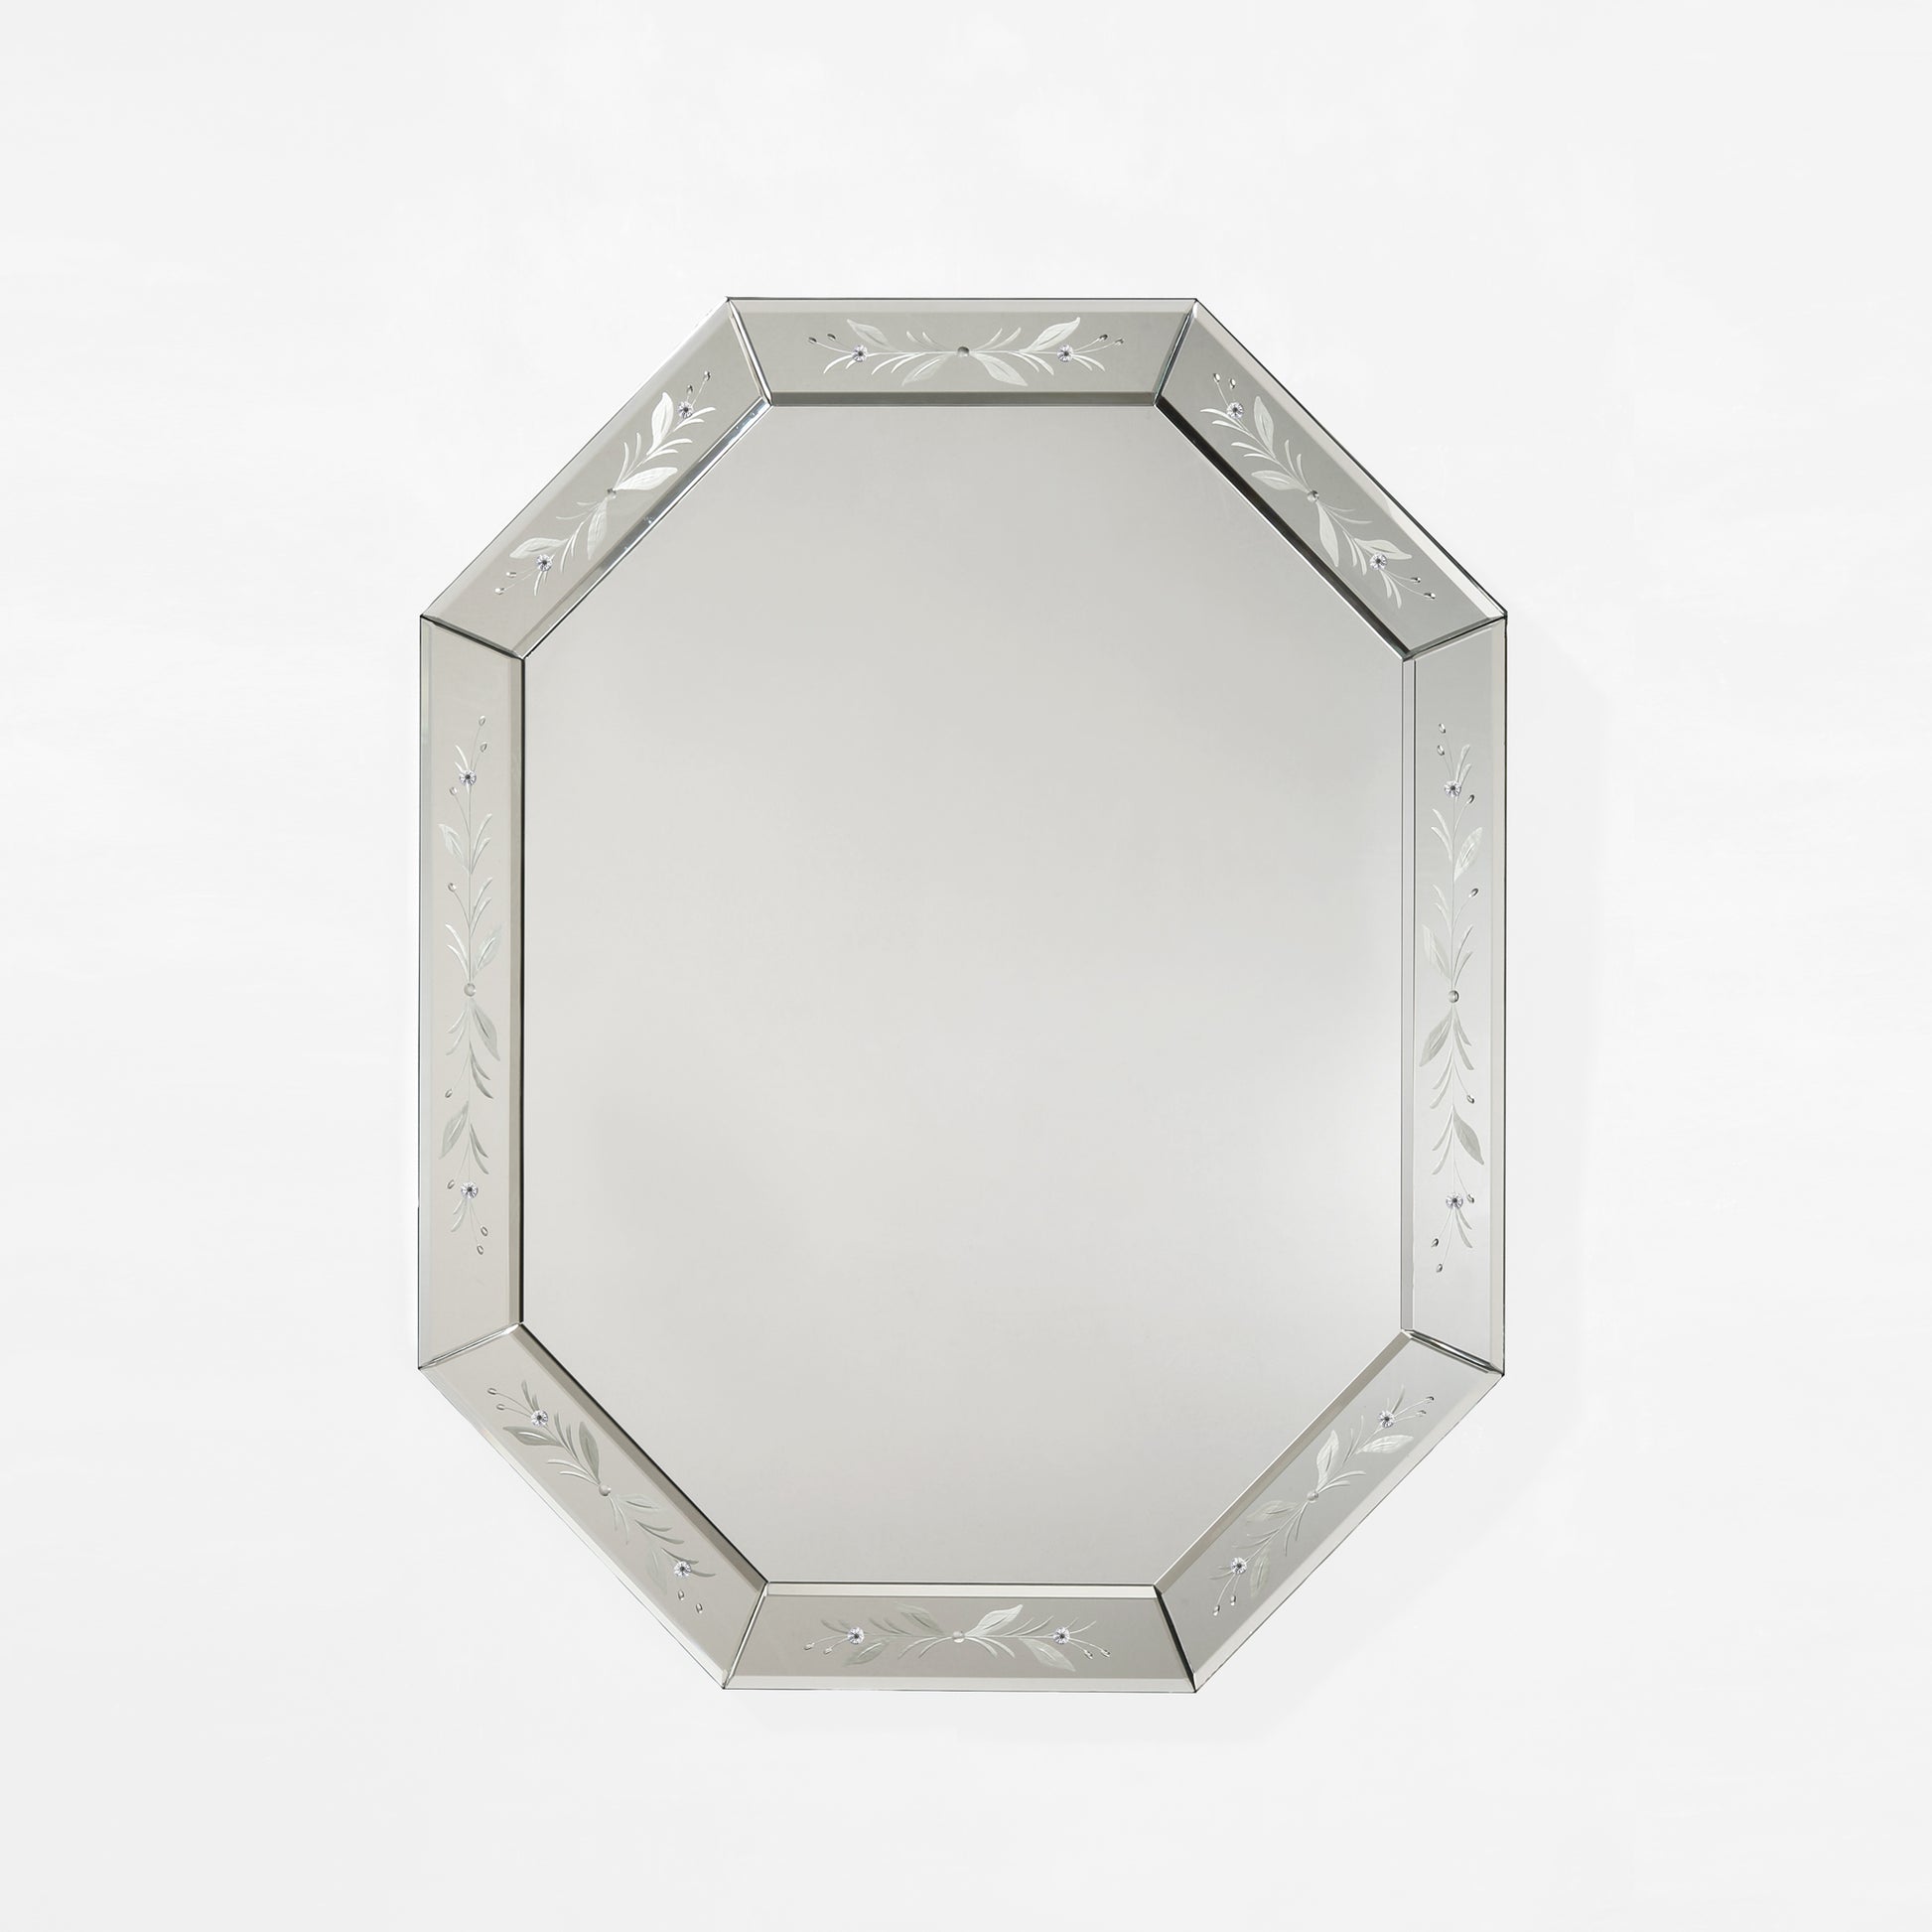 Octagonal Venetian glass mirror.